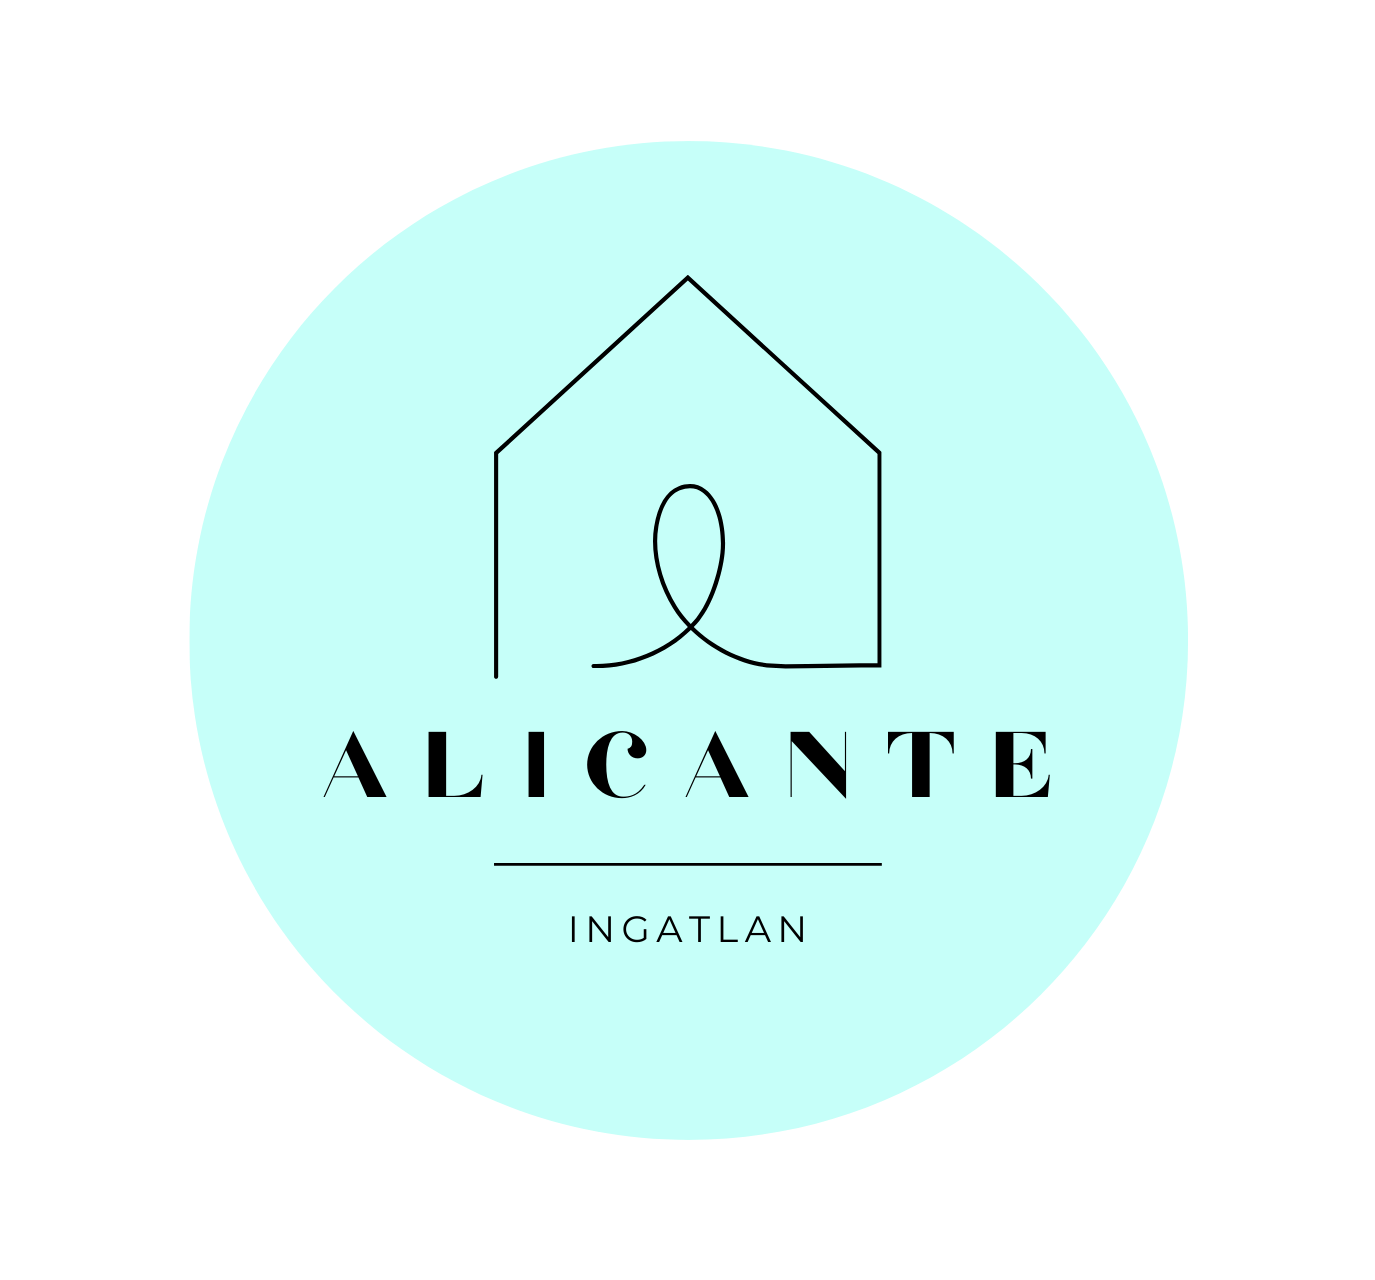 Alicante Ingatlan